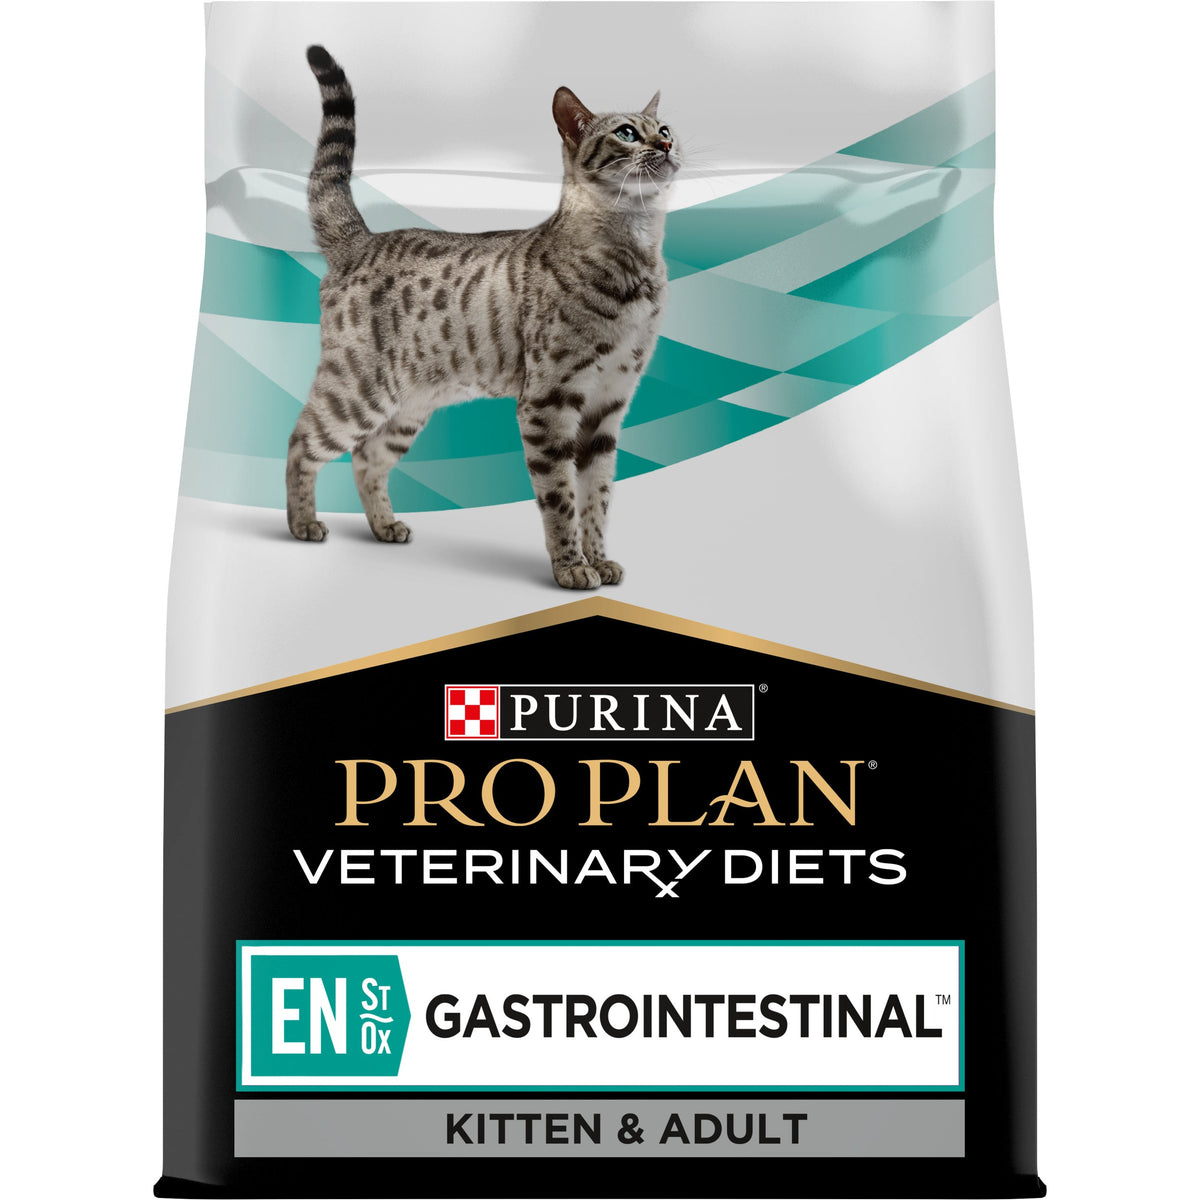 PURINA® PRO PLAN® - Veterinary Diets - Feline EN ST/OX Gastrointestinal